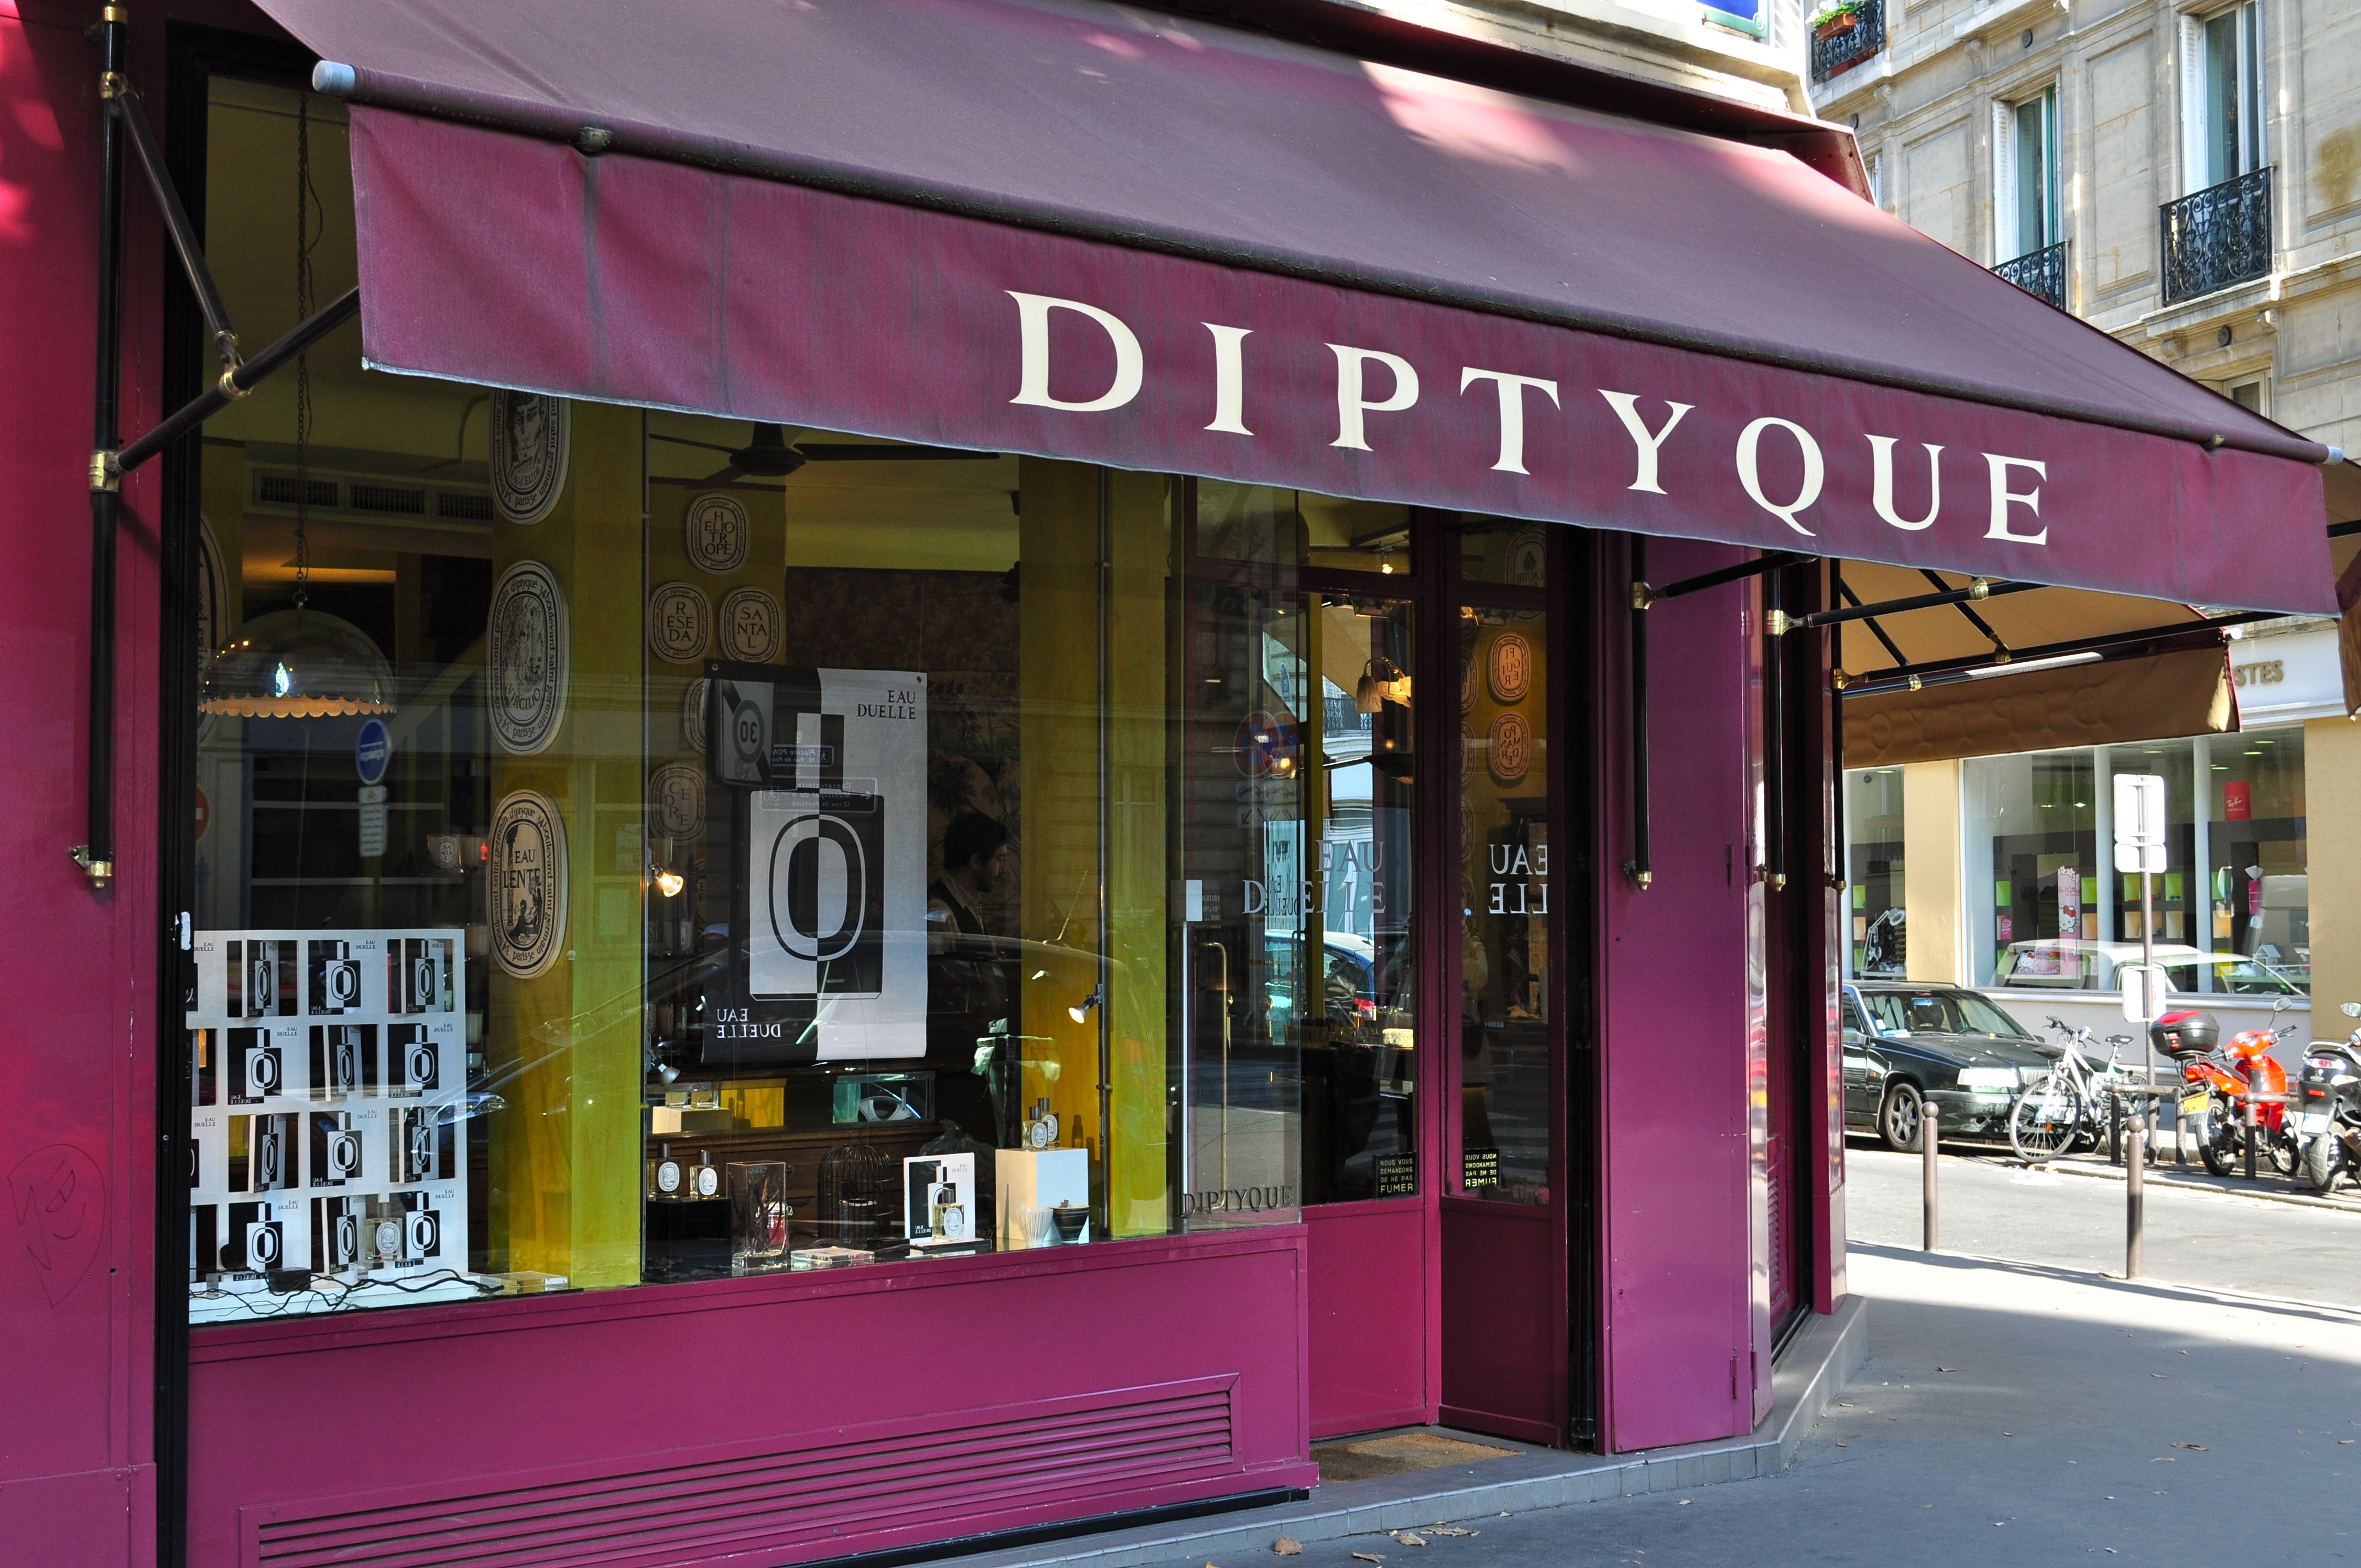 diptyque in paris | Fleurishing